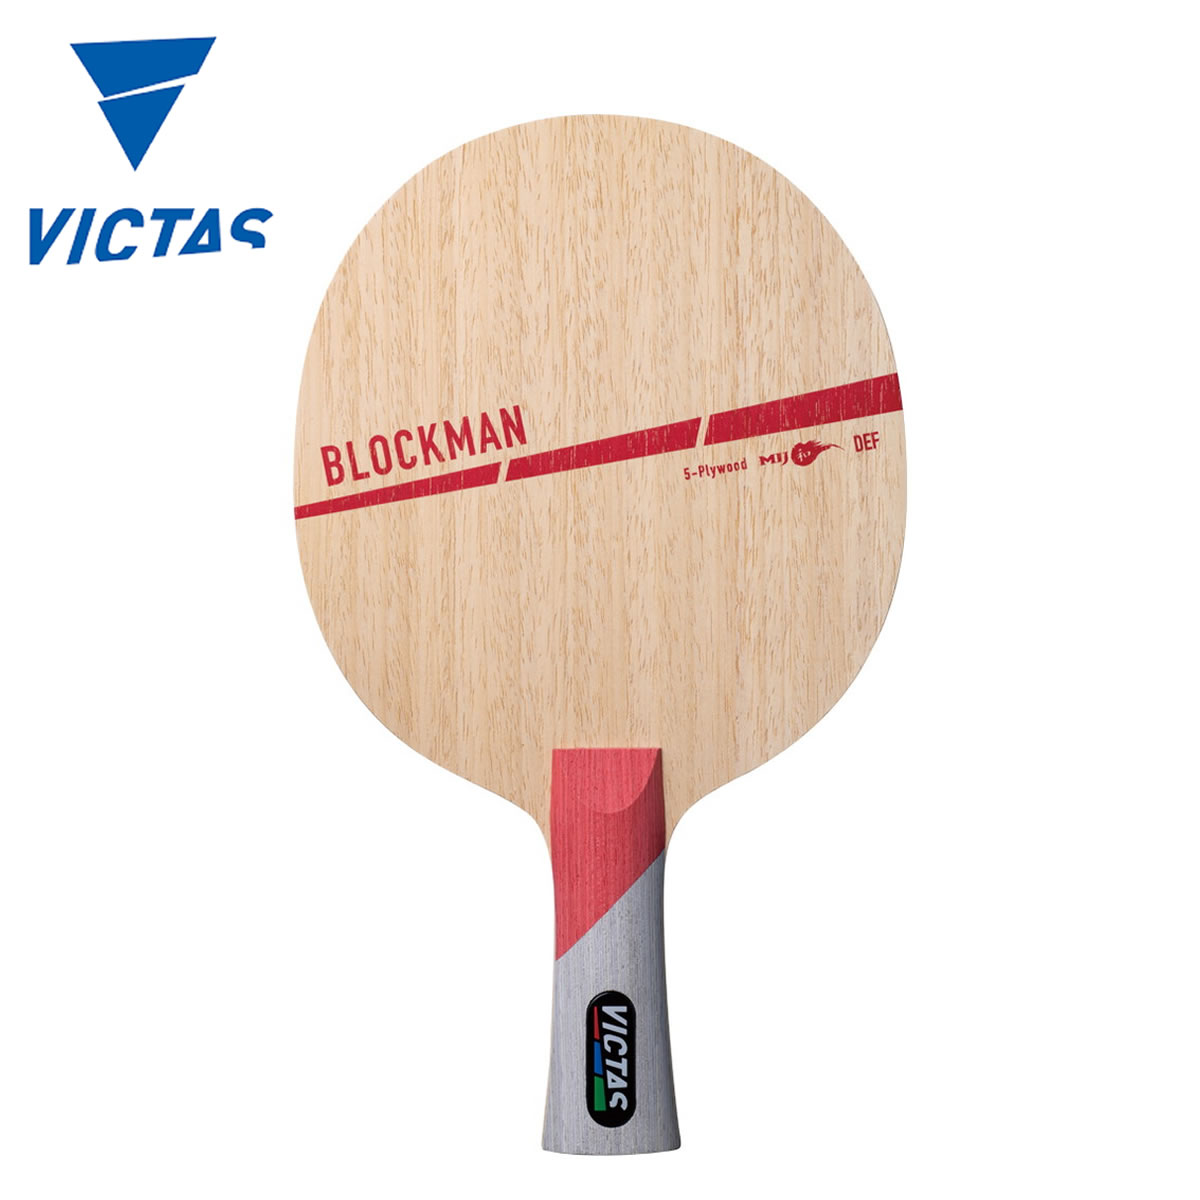 VICTAS 310204 スピード対応 全国送料無料 BLOCKMAN FL 卓球ラケット 2021春夏 お値打ち価格で ヴィクタス 取り寄せ